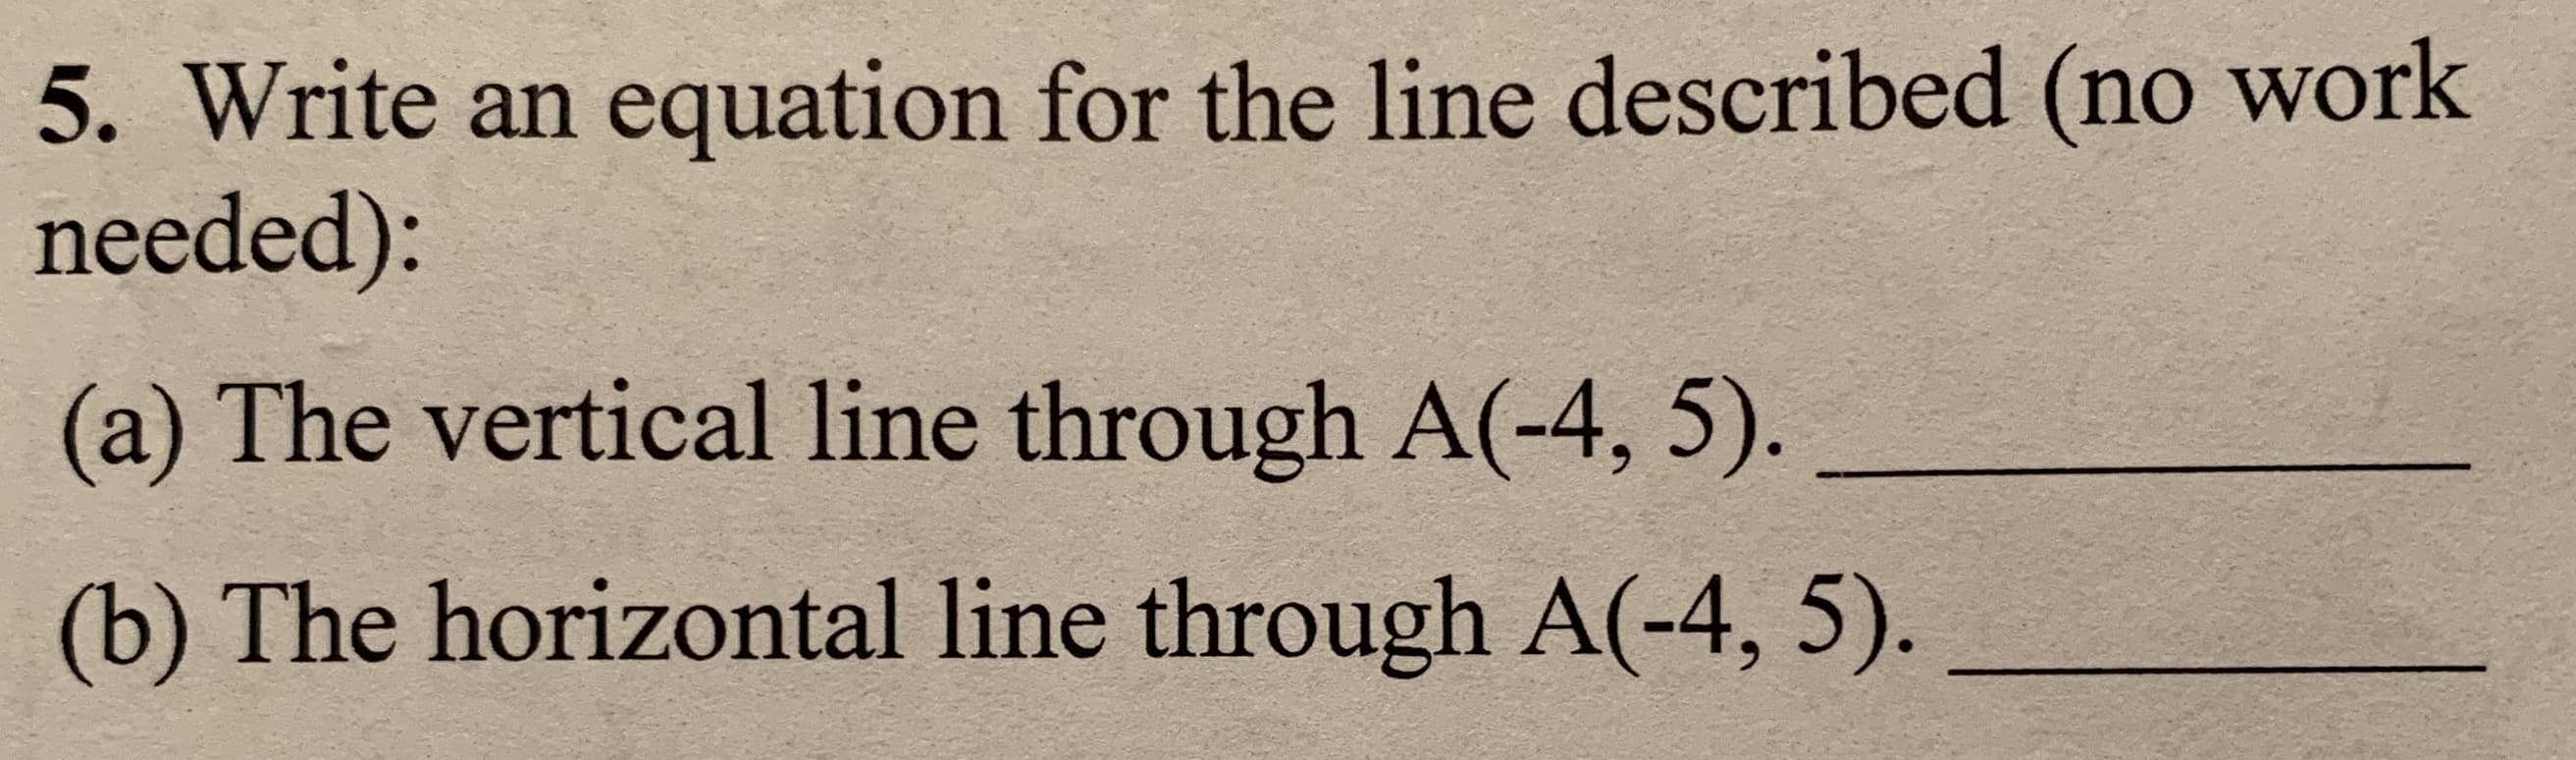 5. Write an equation for the line described (no work
needed):
(a) The vertical line through A(-4, 5).
(b) The horizontal line through A(-4, 5).
